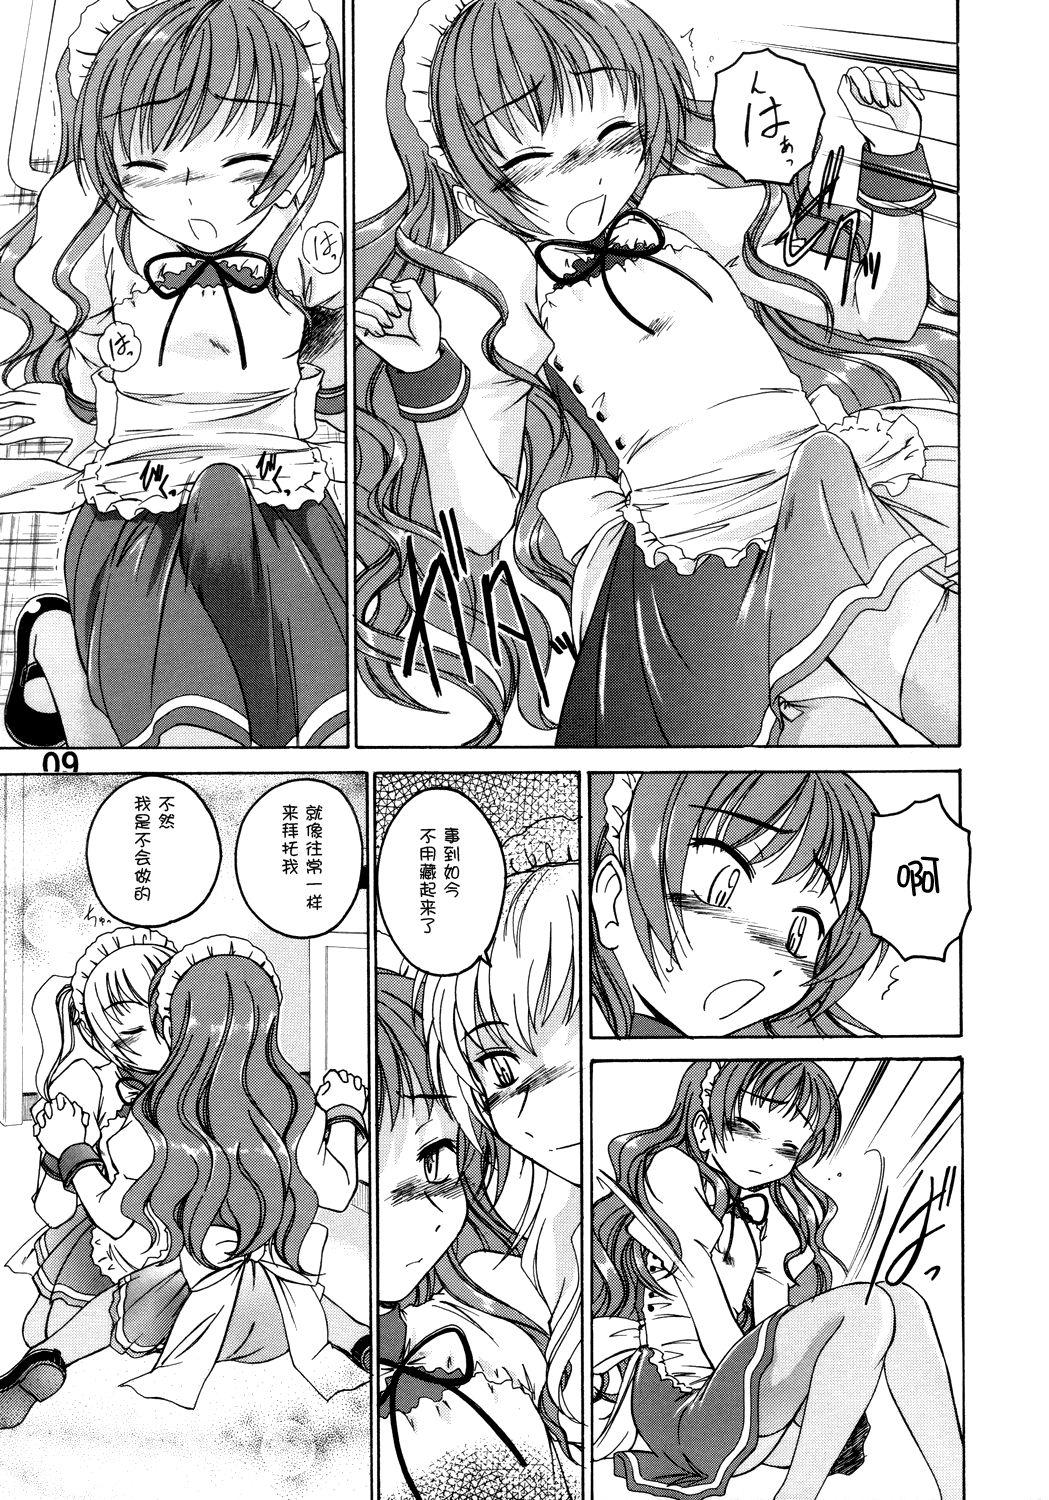 Mature Woman Manga Sangyou Haikibutsu 11 - Comic Industrial Wastes 11 - Princess princess Africa - Page 8